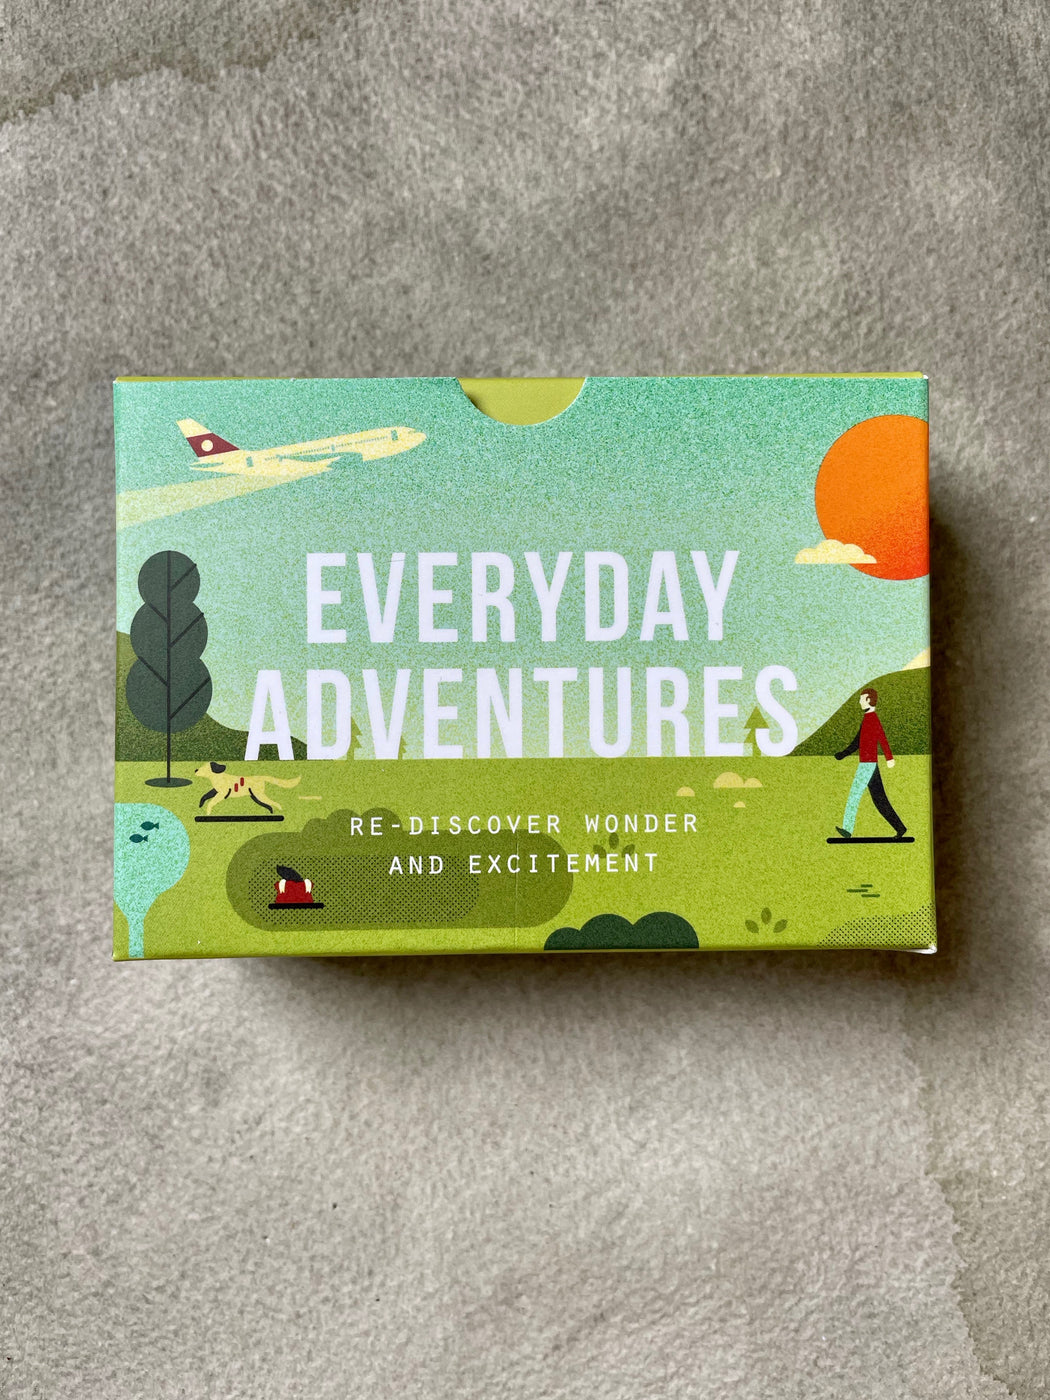 Everyday Adventures Cards